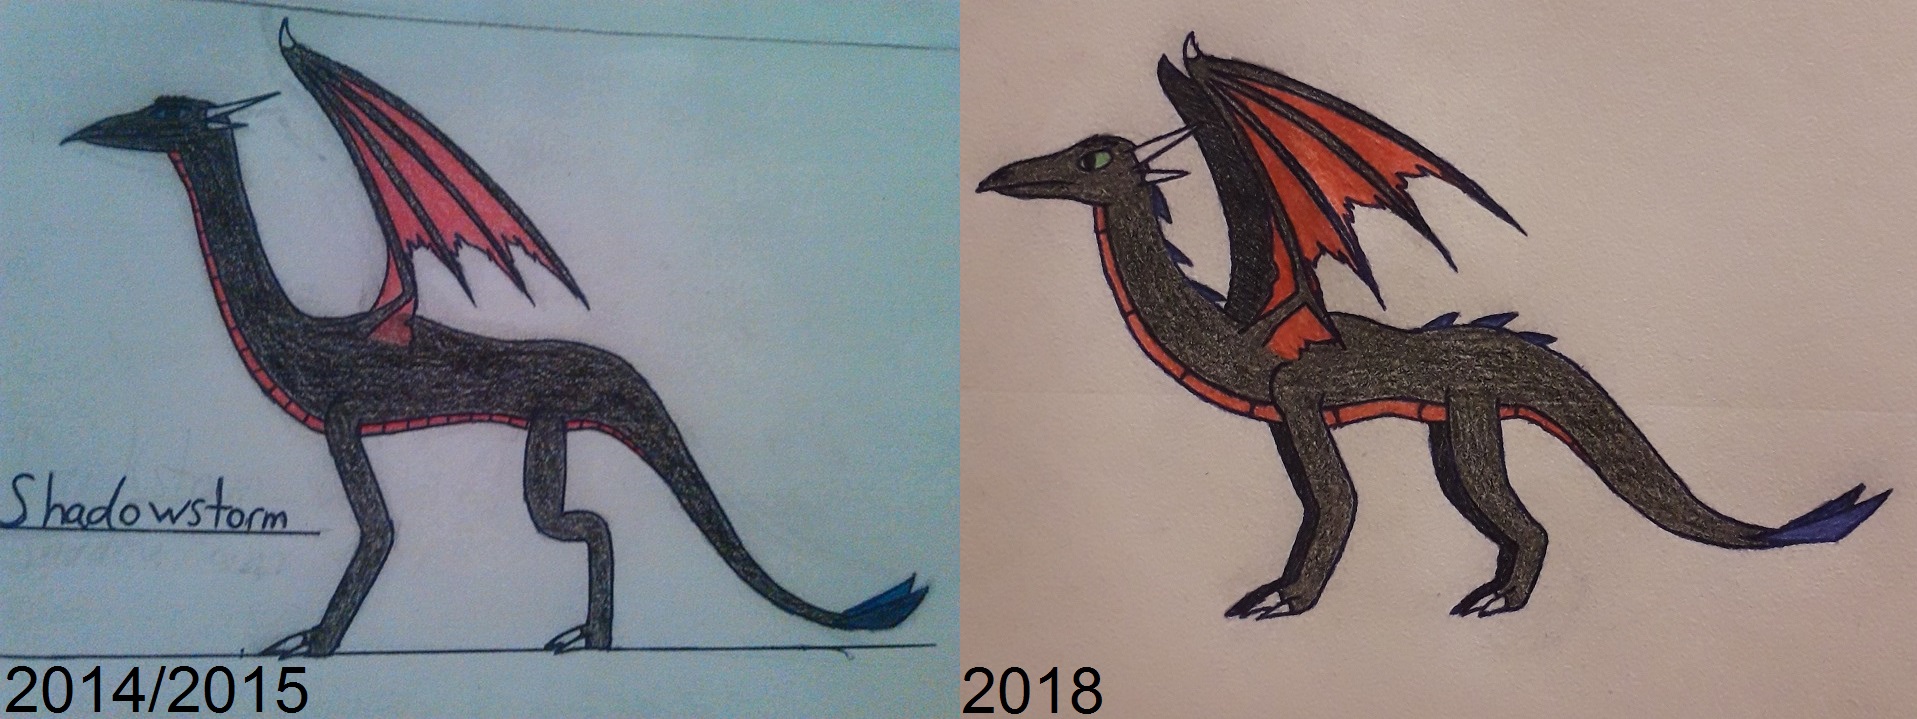 drawing_comparison__shadowstorm_by_drago